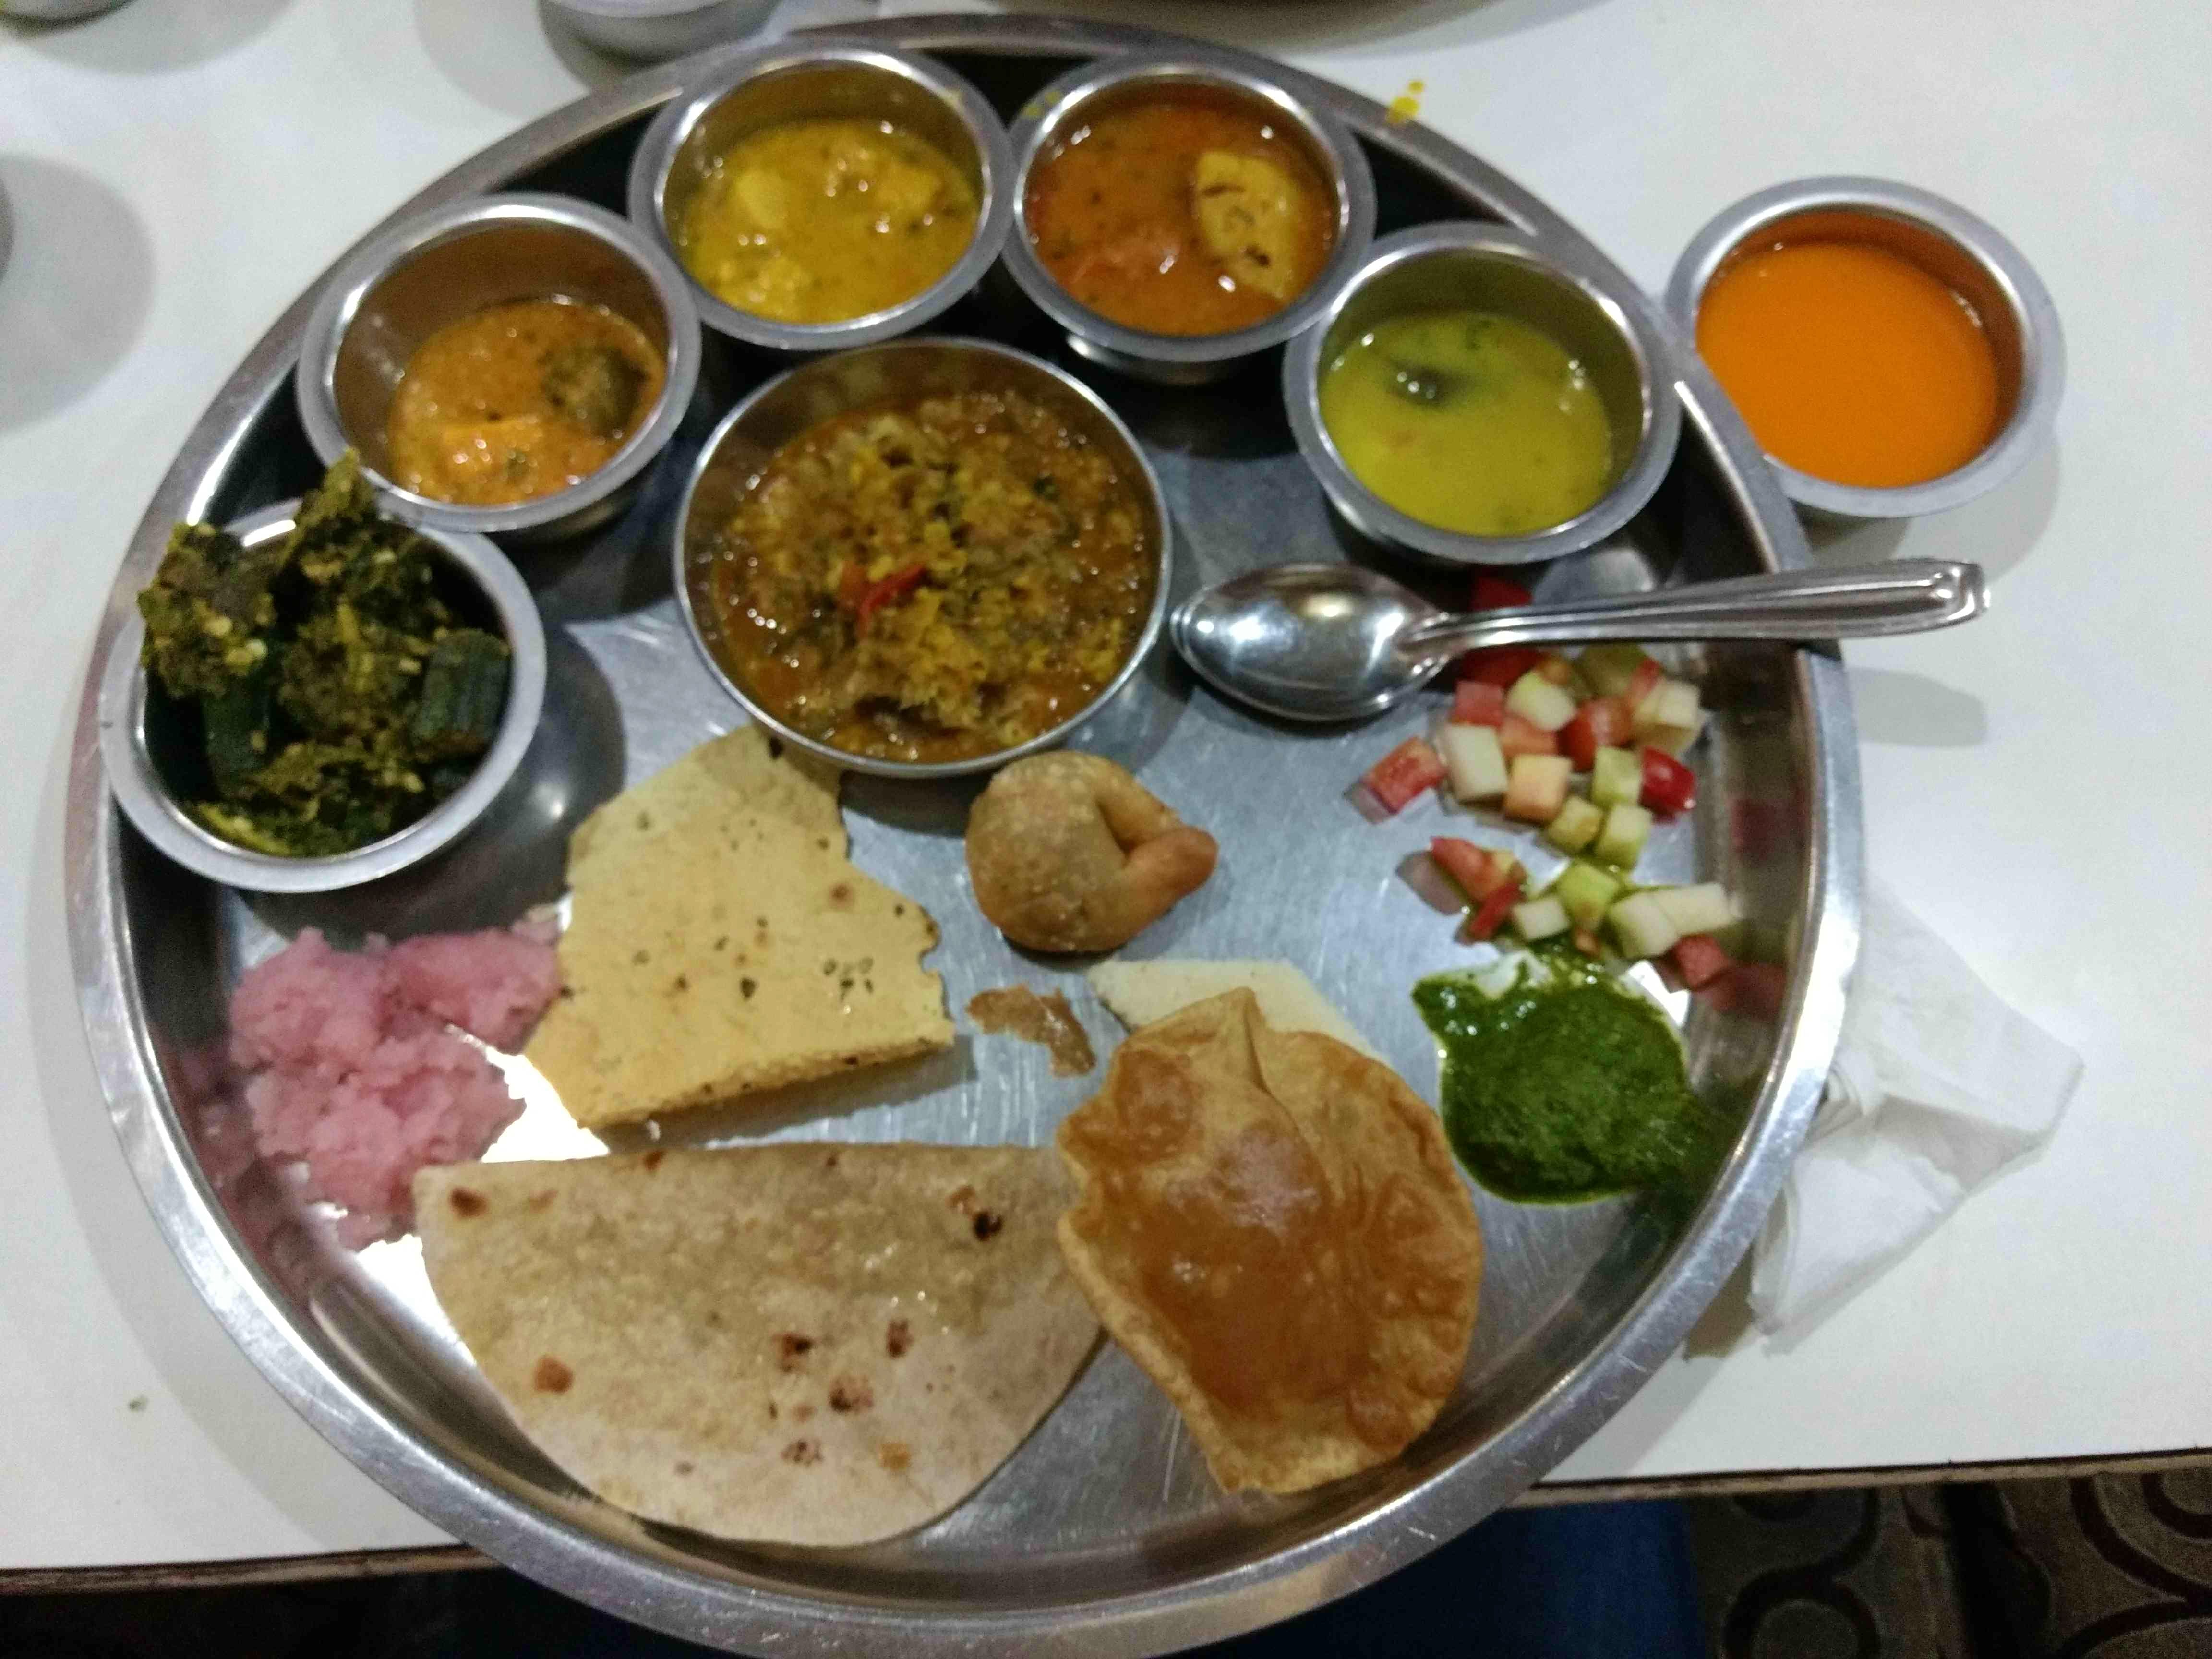 Dish,Food,Cuisine,Meal,Ingredient,Punjabi cuisine,Lunch,Chapati,Produce,Maharashtrian cuisine